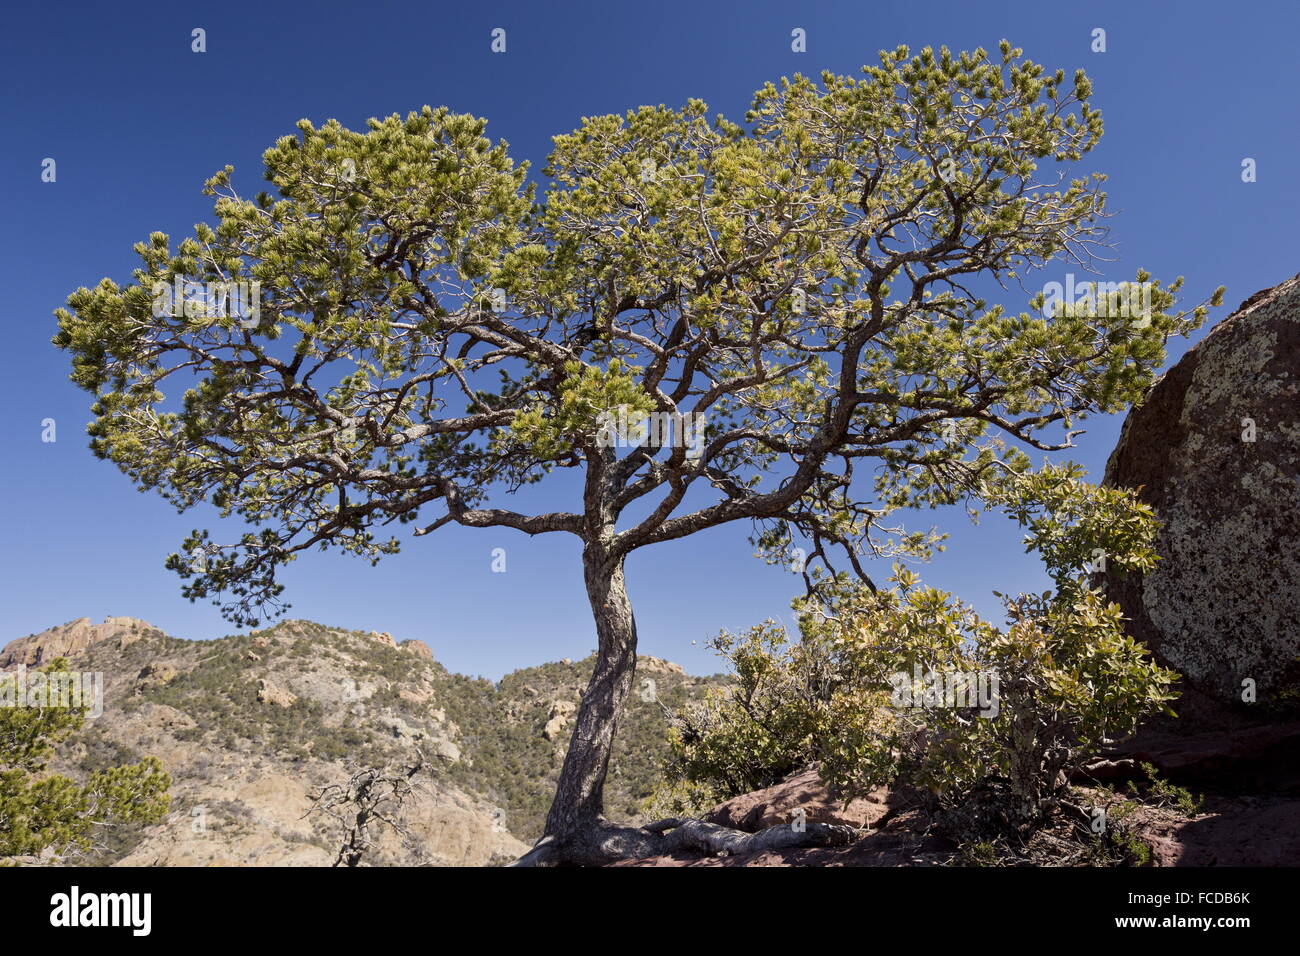 Mexican piñon pine, Pinus cembroides in the Chisos mountains, Big Bend National Park, Texas. Stock Photo